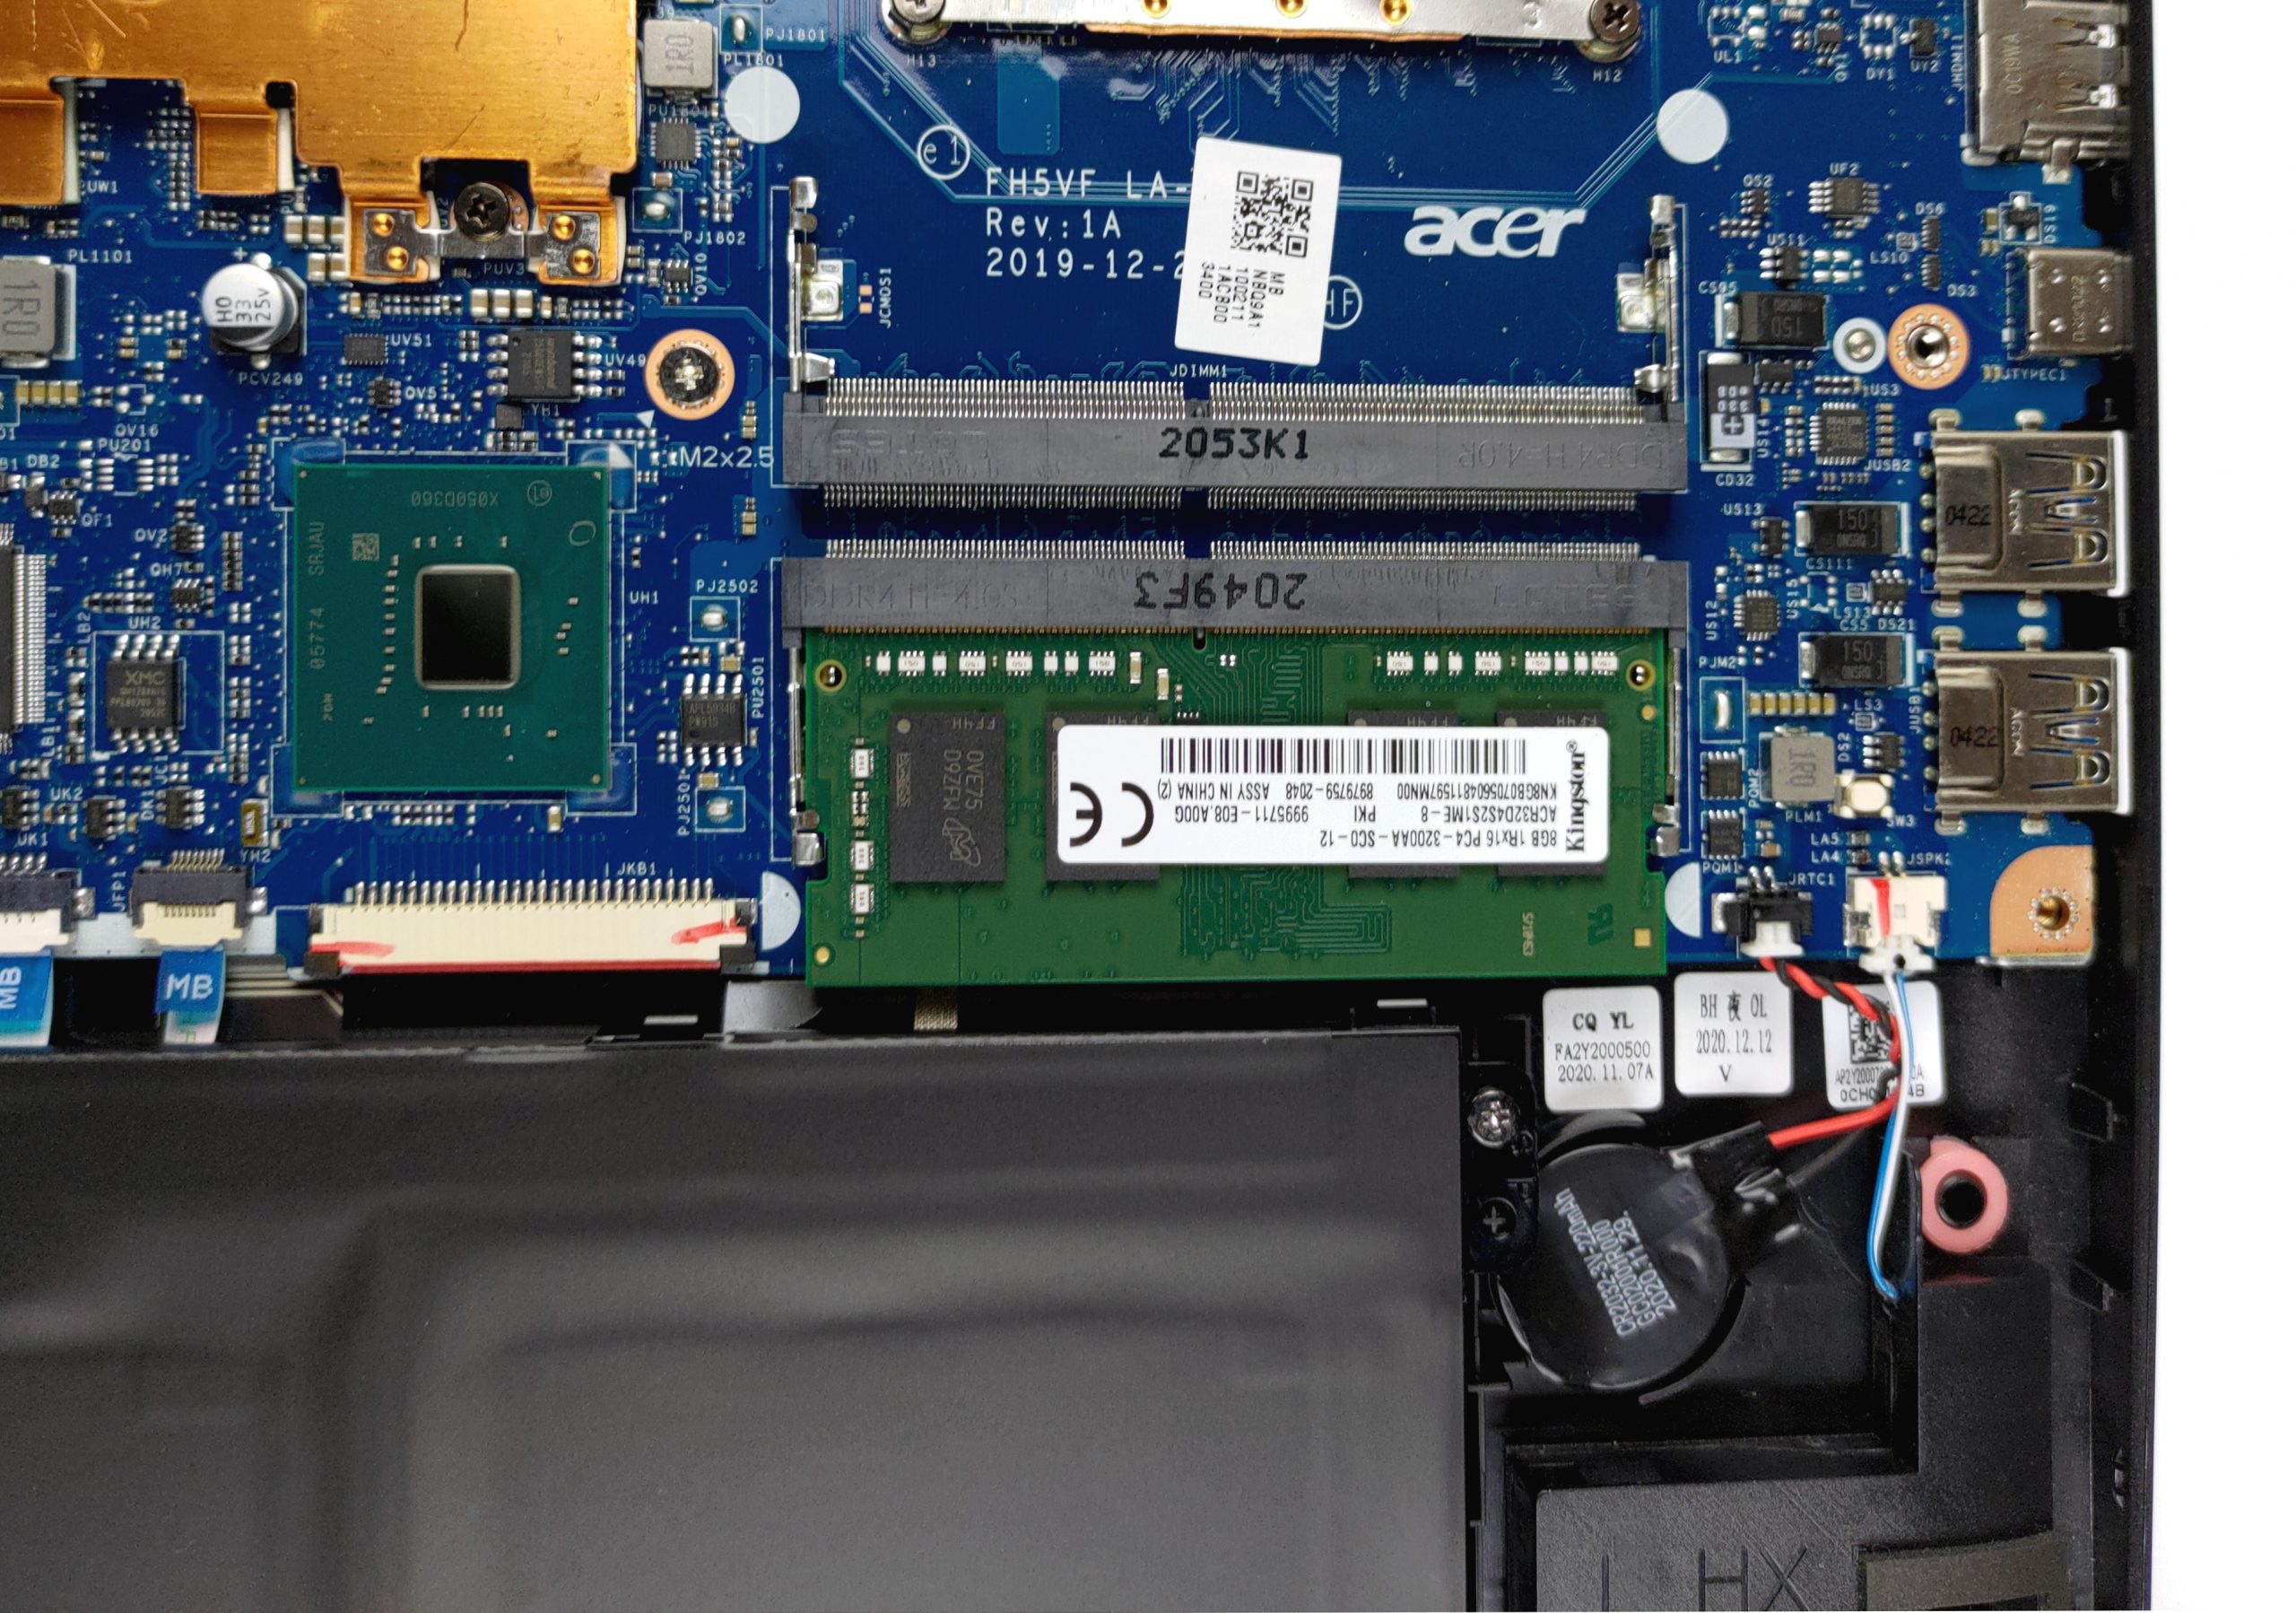 Inside Acer 7 (A715-75G) - disassembly upgrade options | LaptopMedia.com